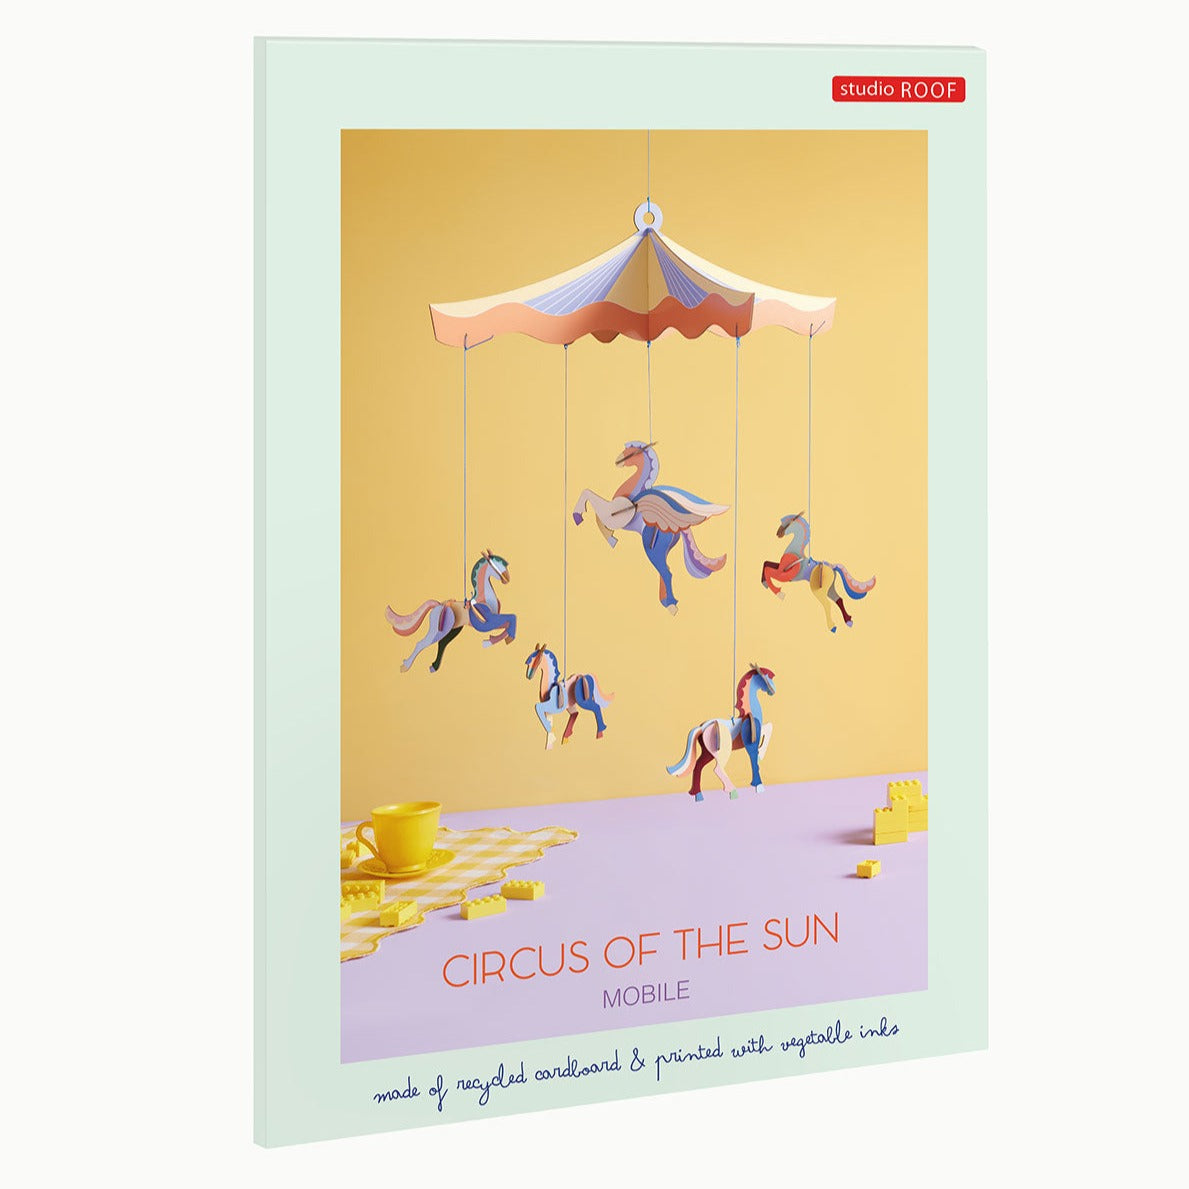 Circus of the sun